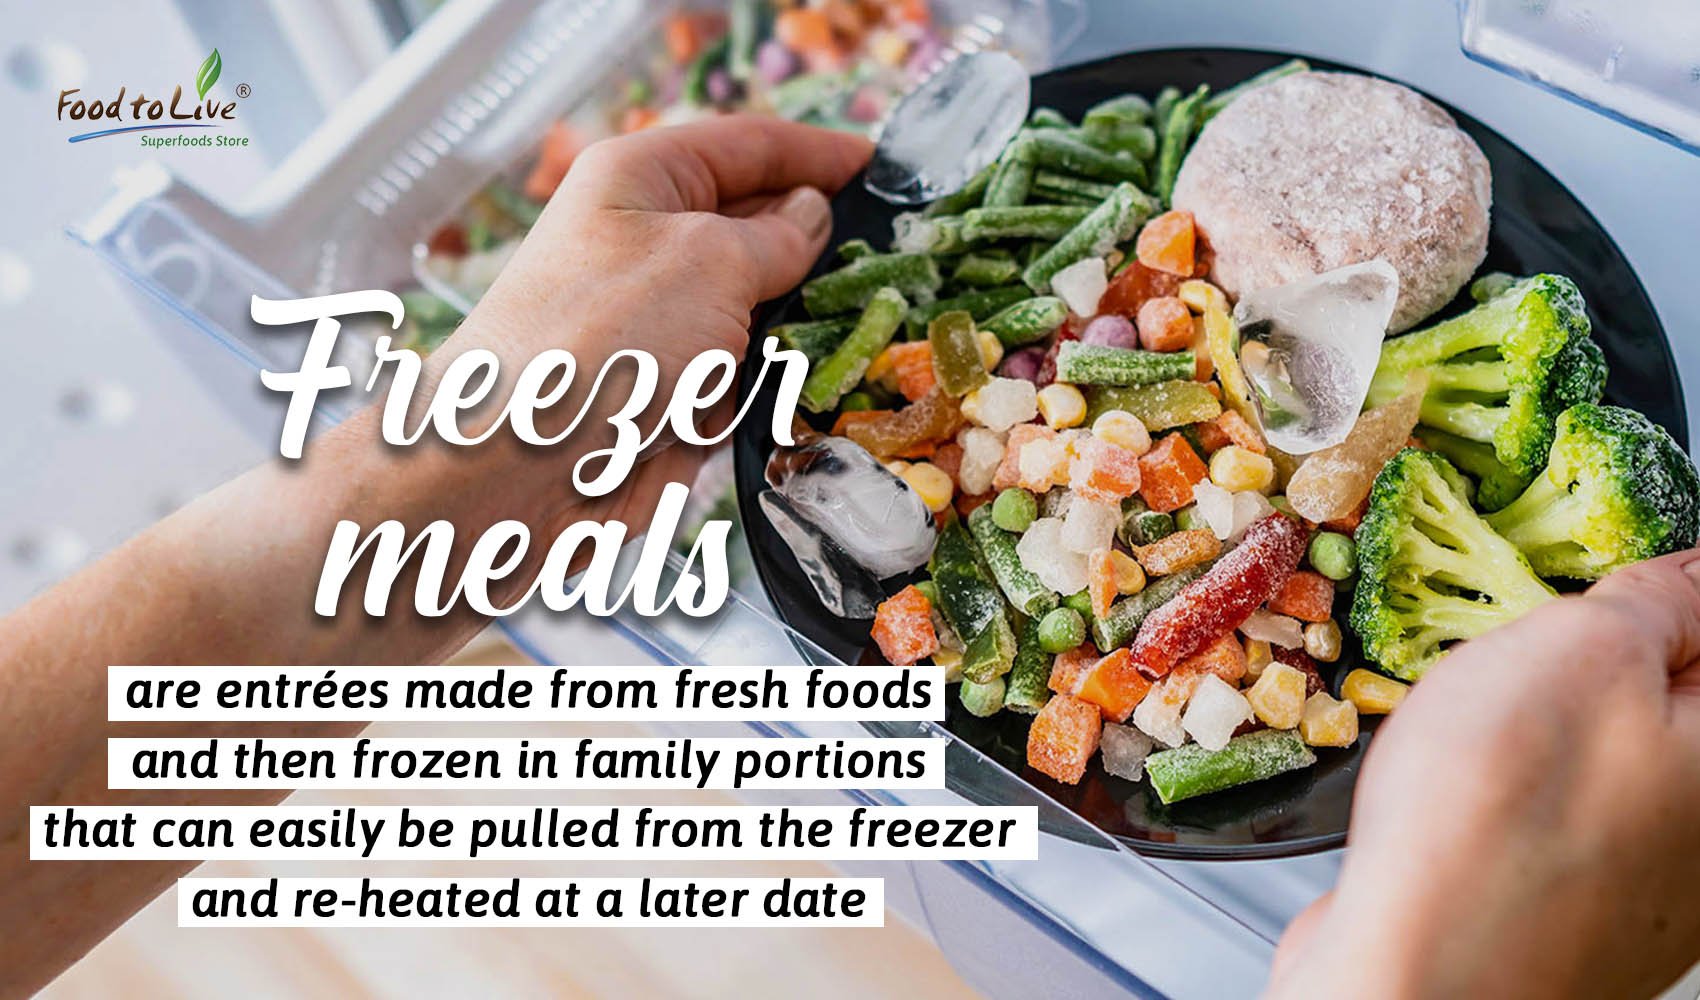 Homemade Freezer Meals - The New Trend!